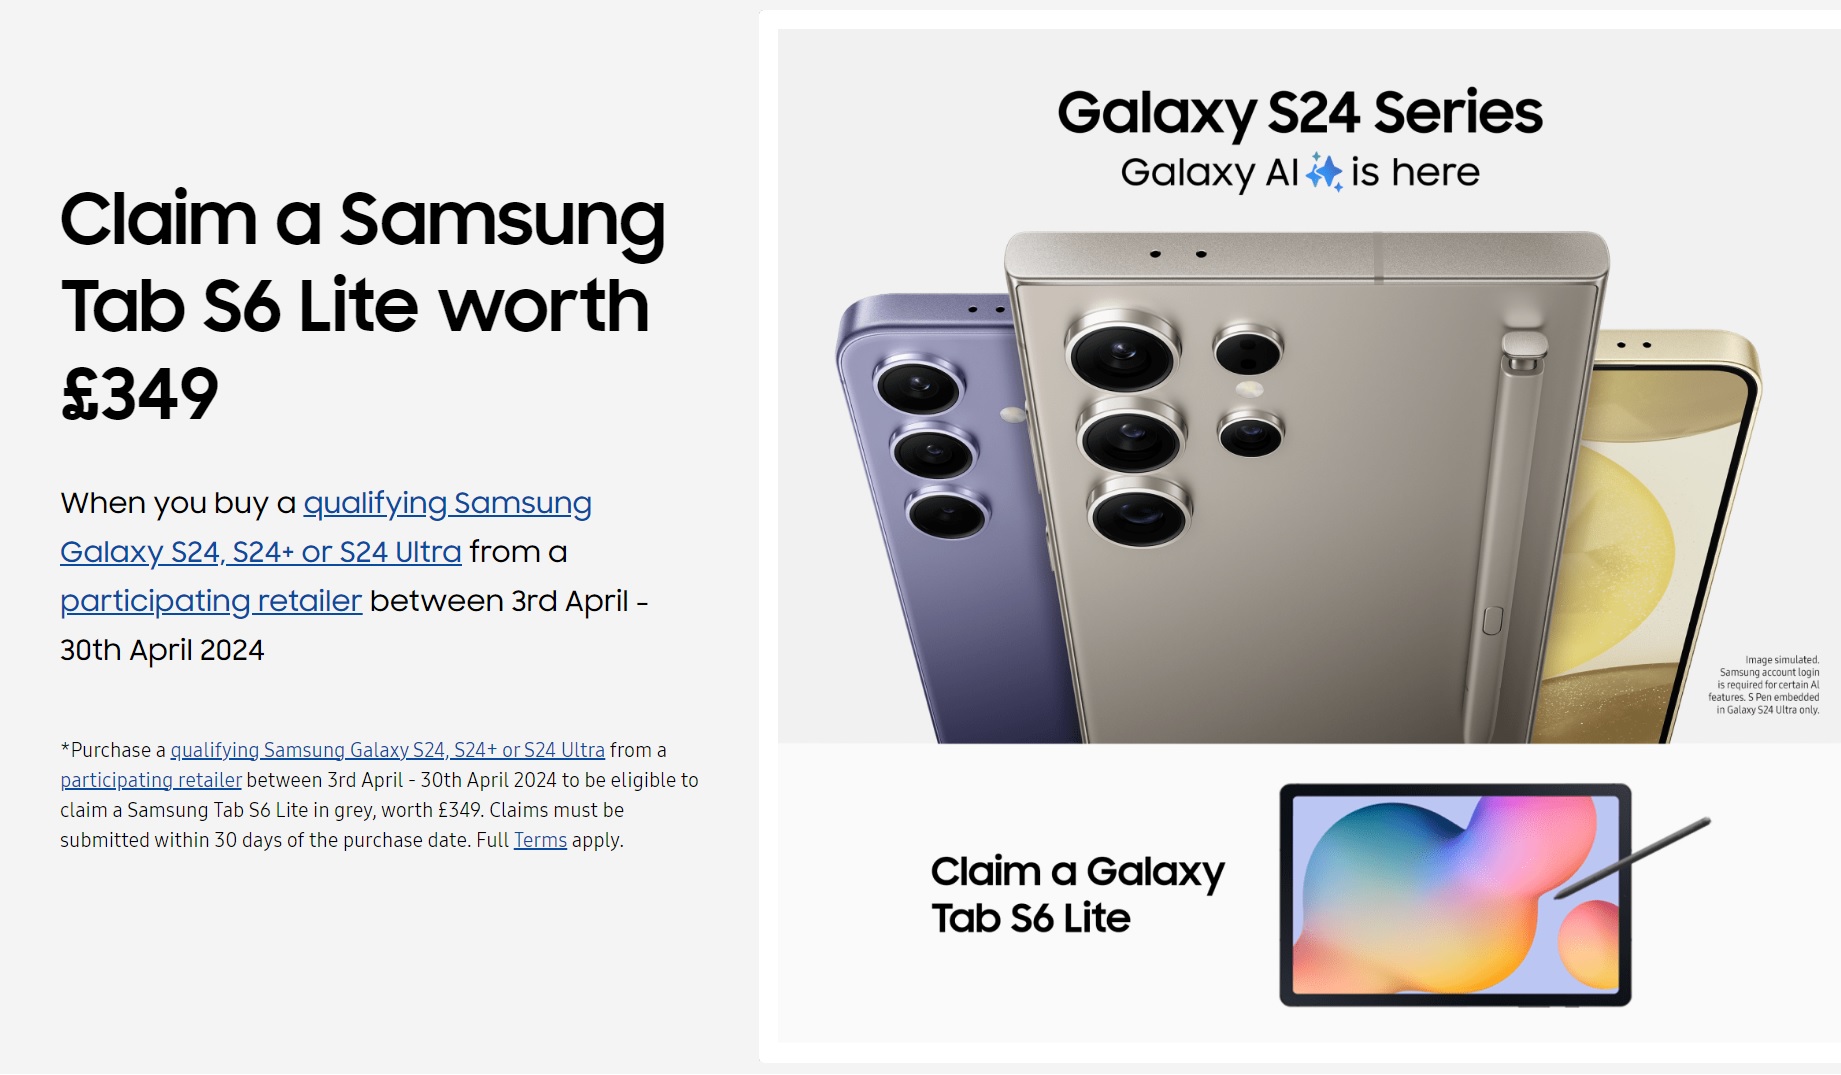 Claim a free Galaxy Tab S6 Lite with Samsung Galaxy S24 deals